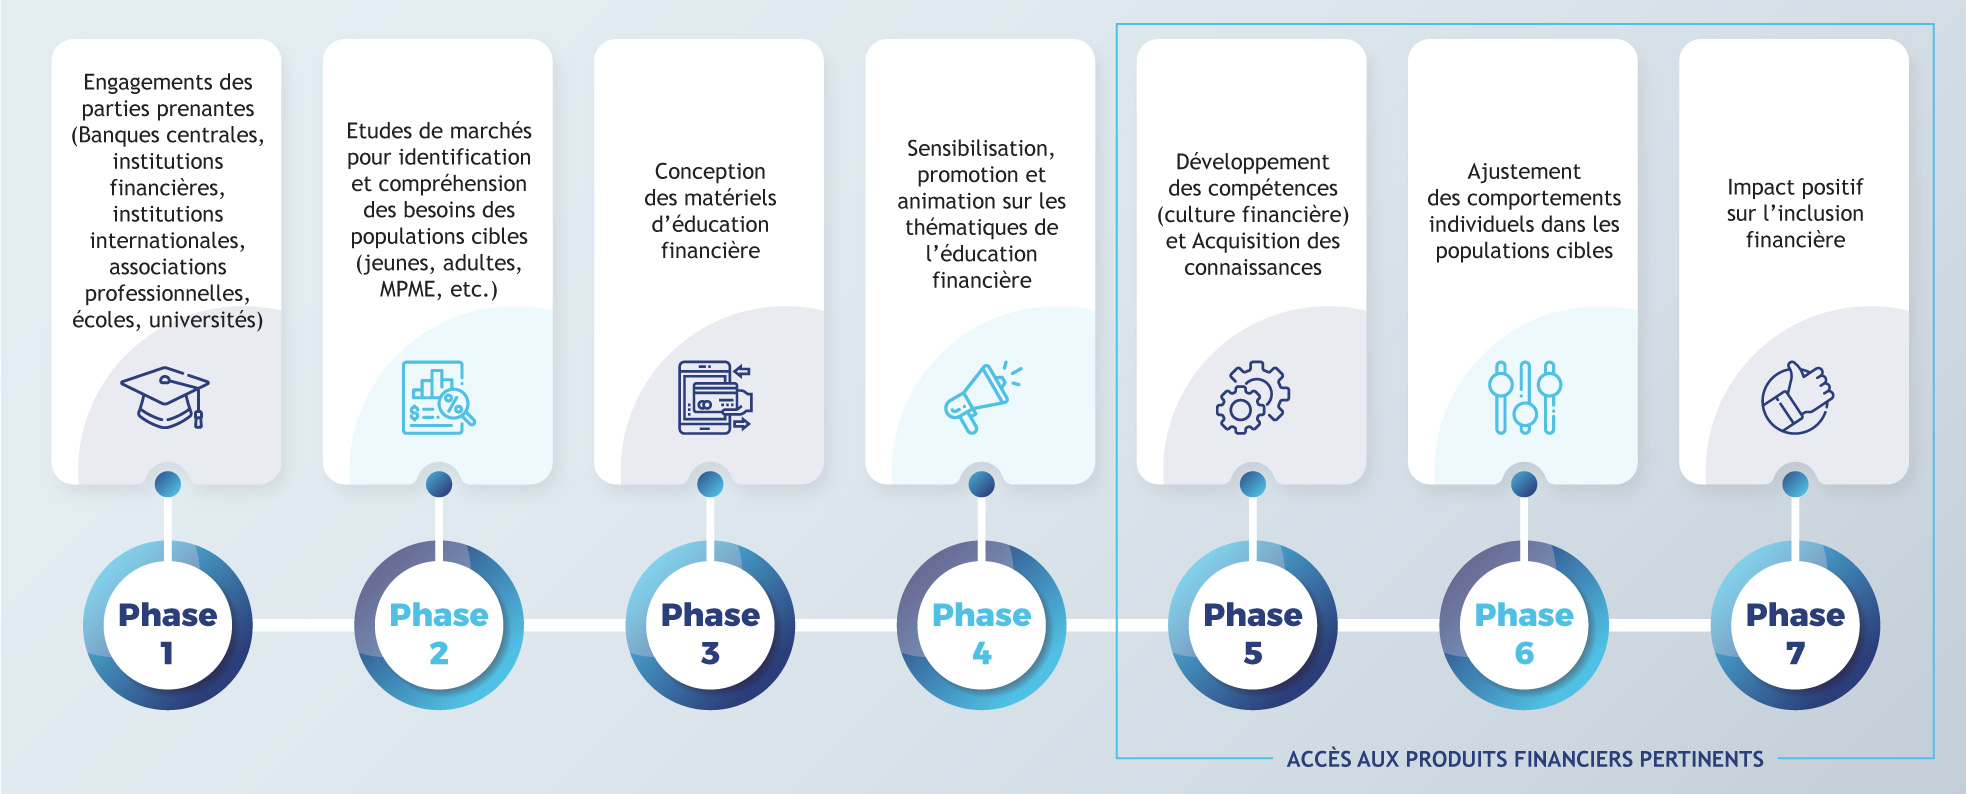 phases education financiere